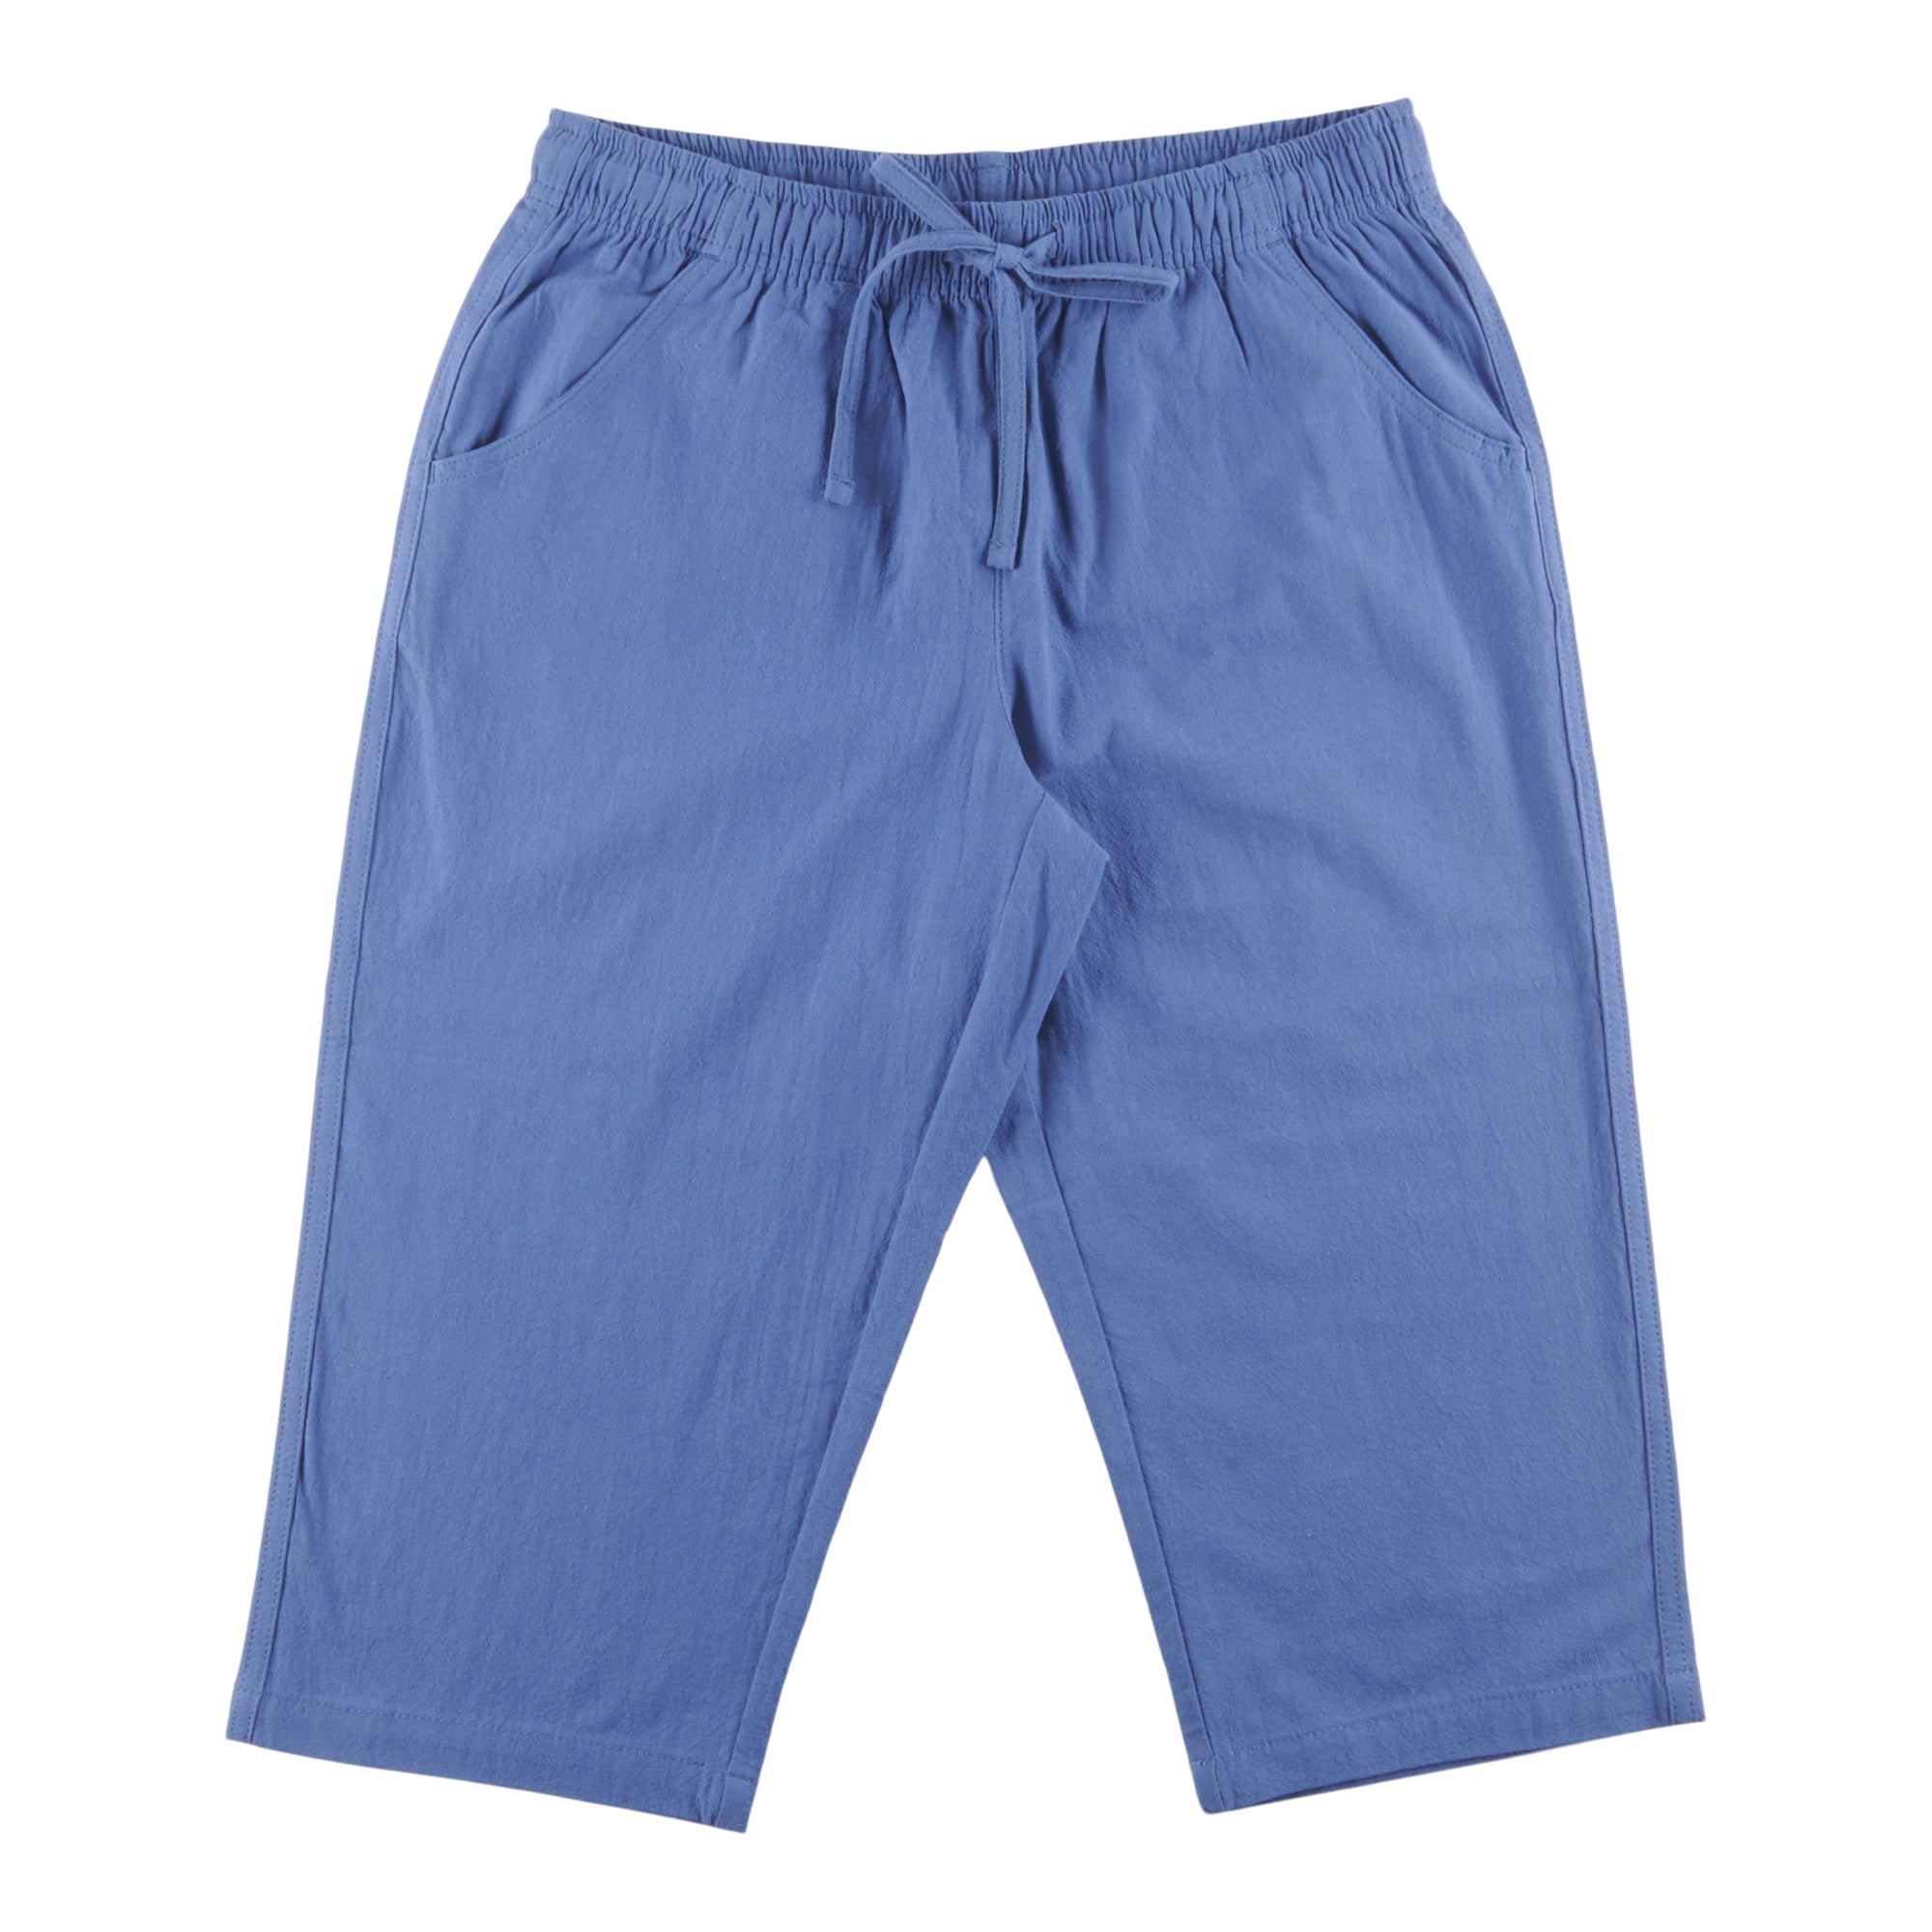 Classic Editions Women's Summer Look Solid Crinkle Capri Pants